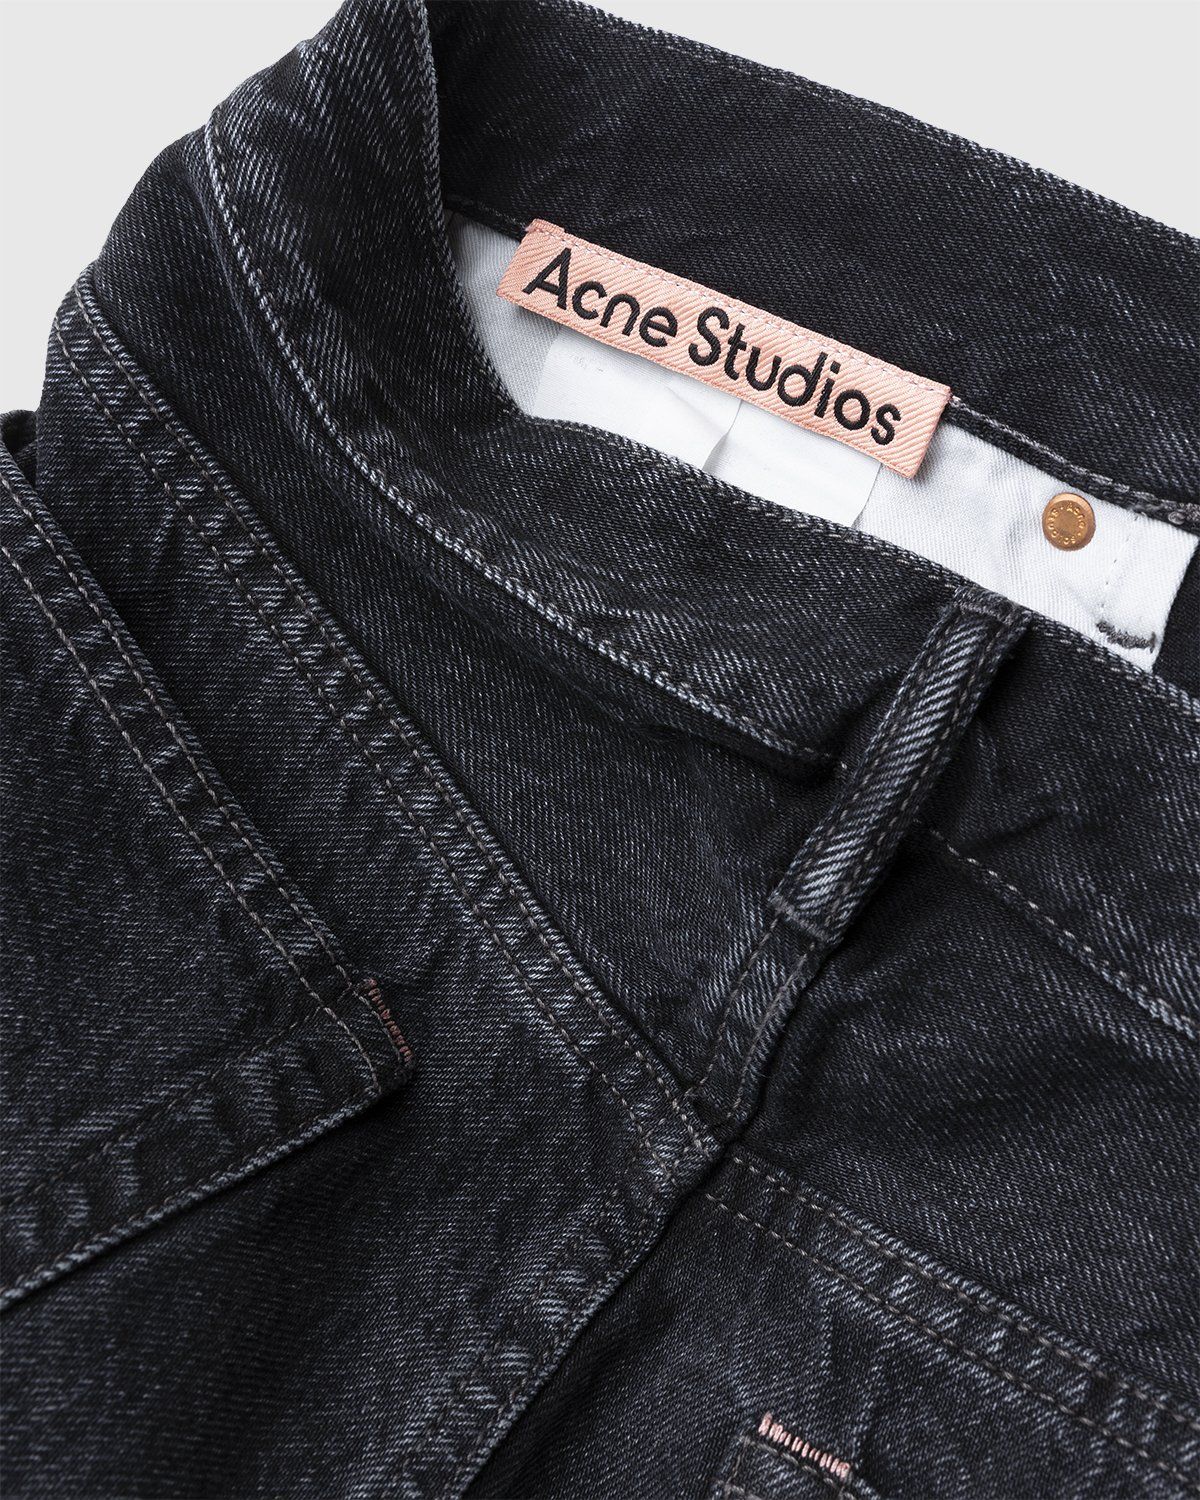 Acne Studios – Brutus 2021M Boot Cut Jeans Black - Denim - Black - Image 5